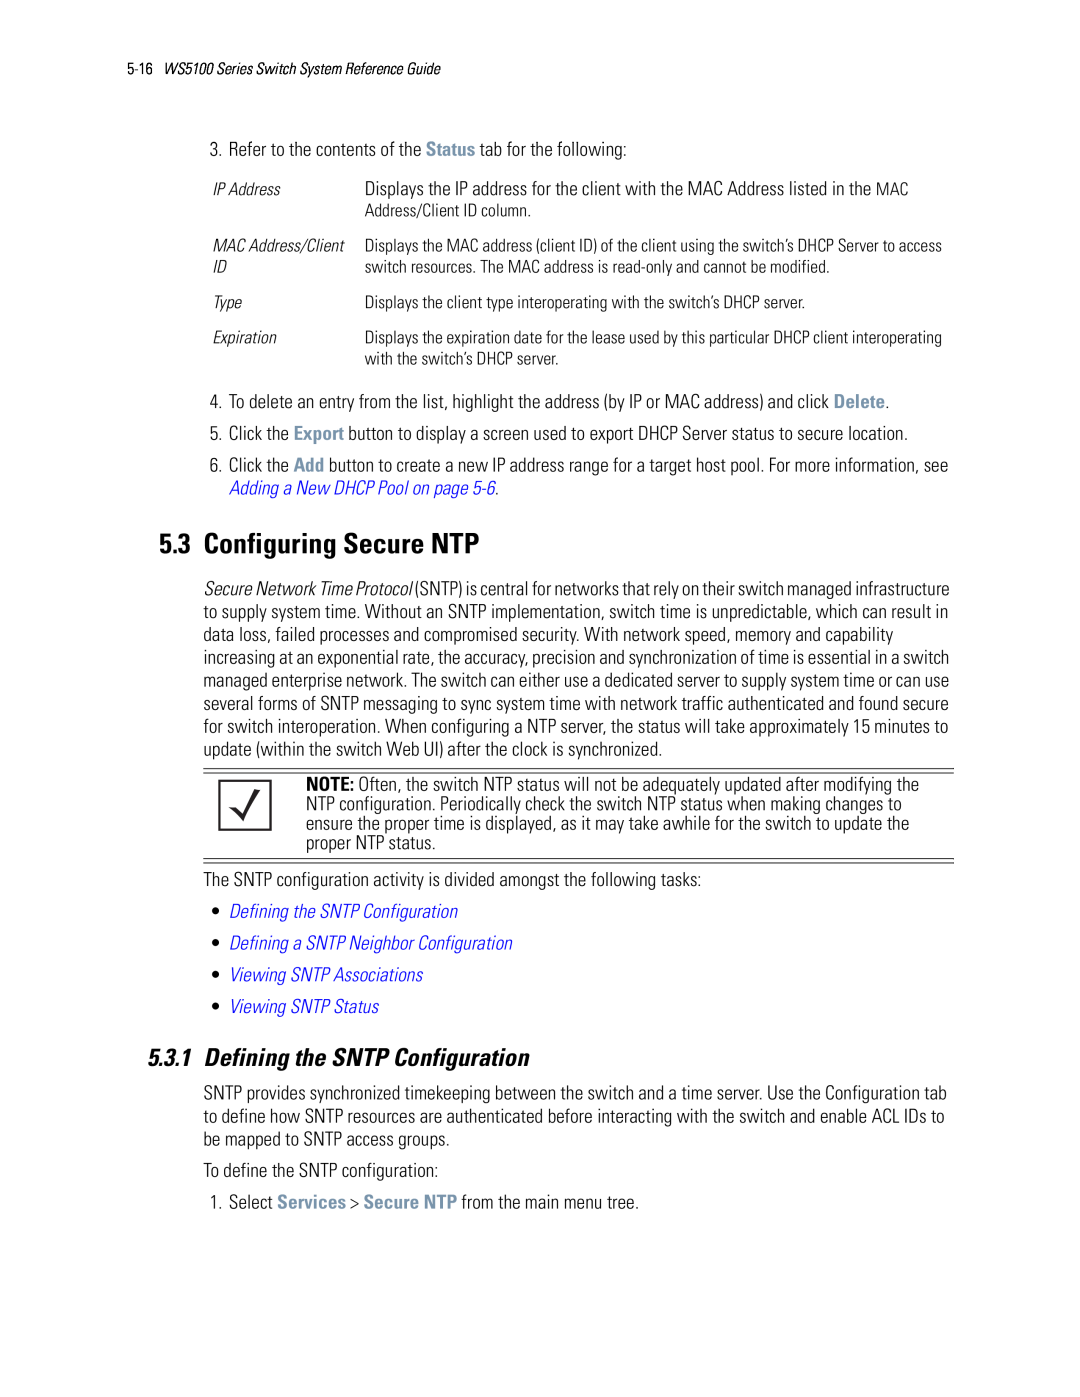 Motorola WS5100 manual 5.3Configuring Secure NTP, 5.3.1Defining the SNTP Configuration, •Defining the SNTP Configuration 